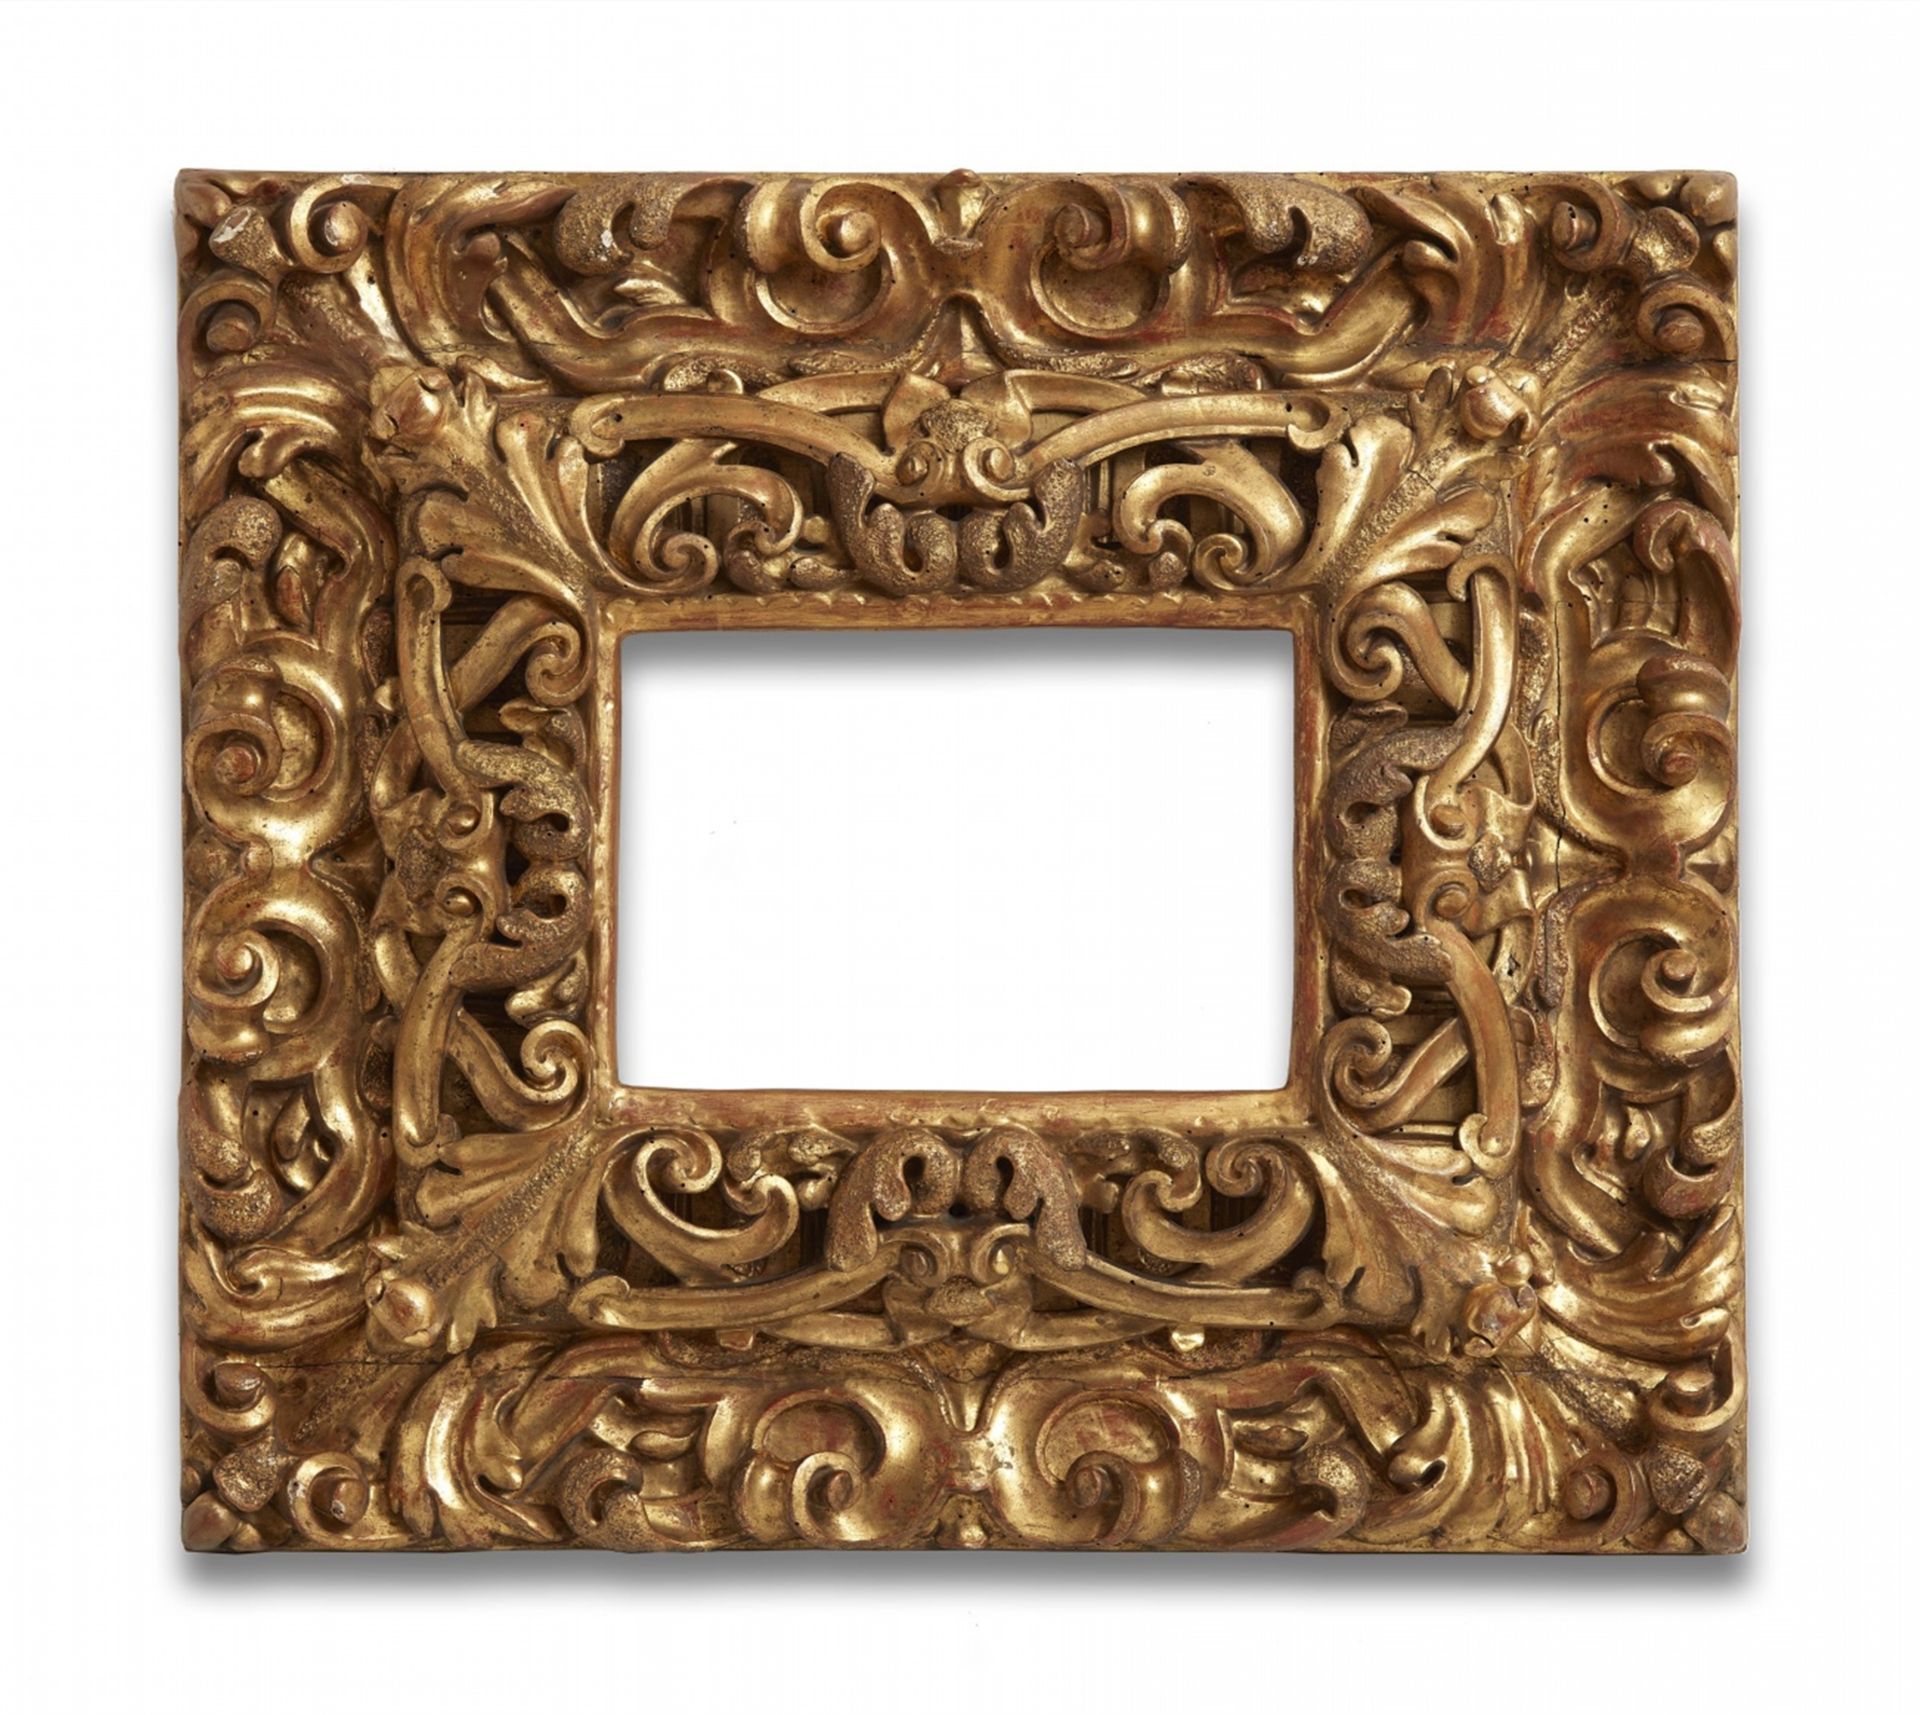 An Italian carved giltwood frame